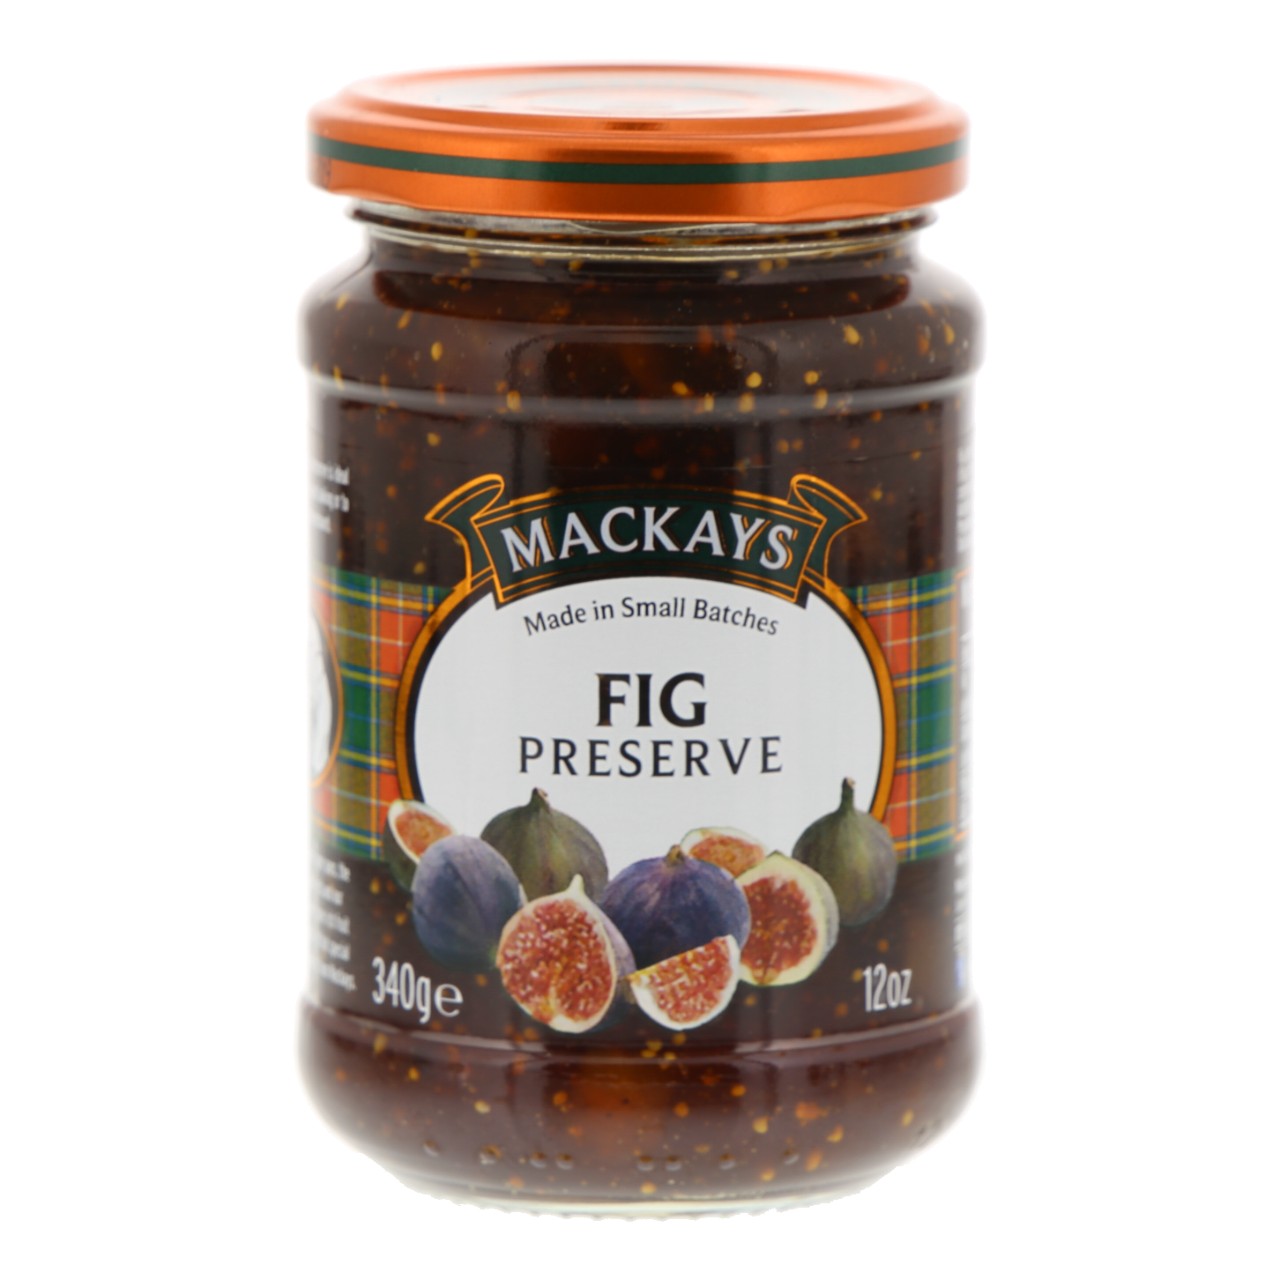 Fig preserve